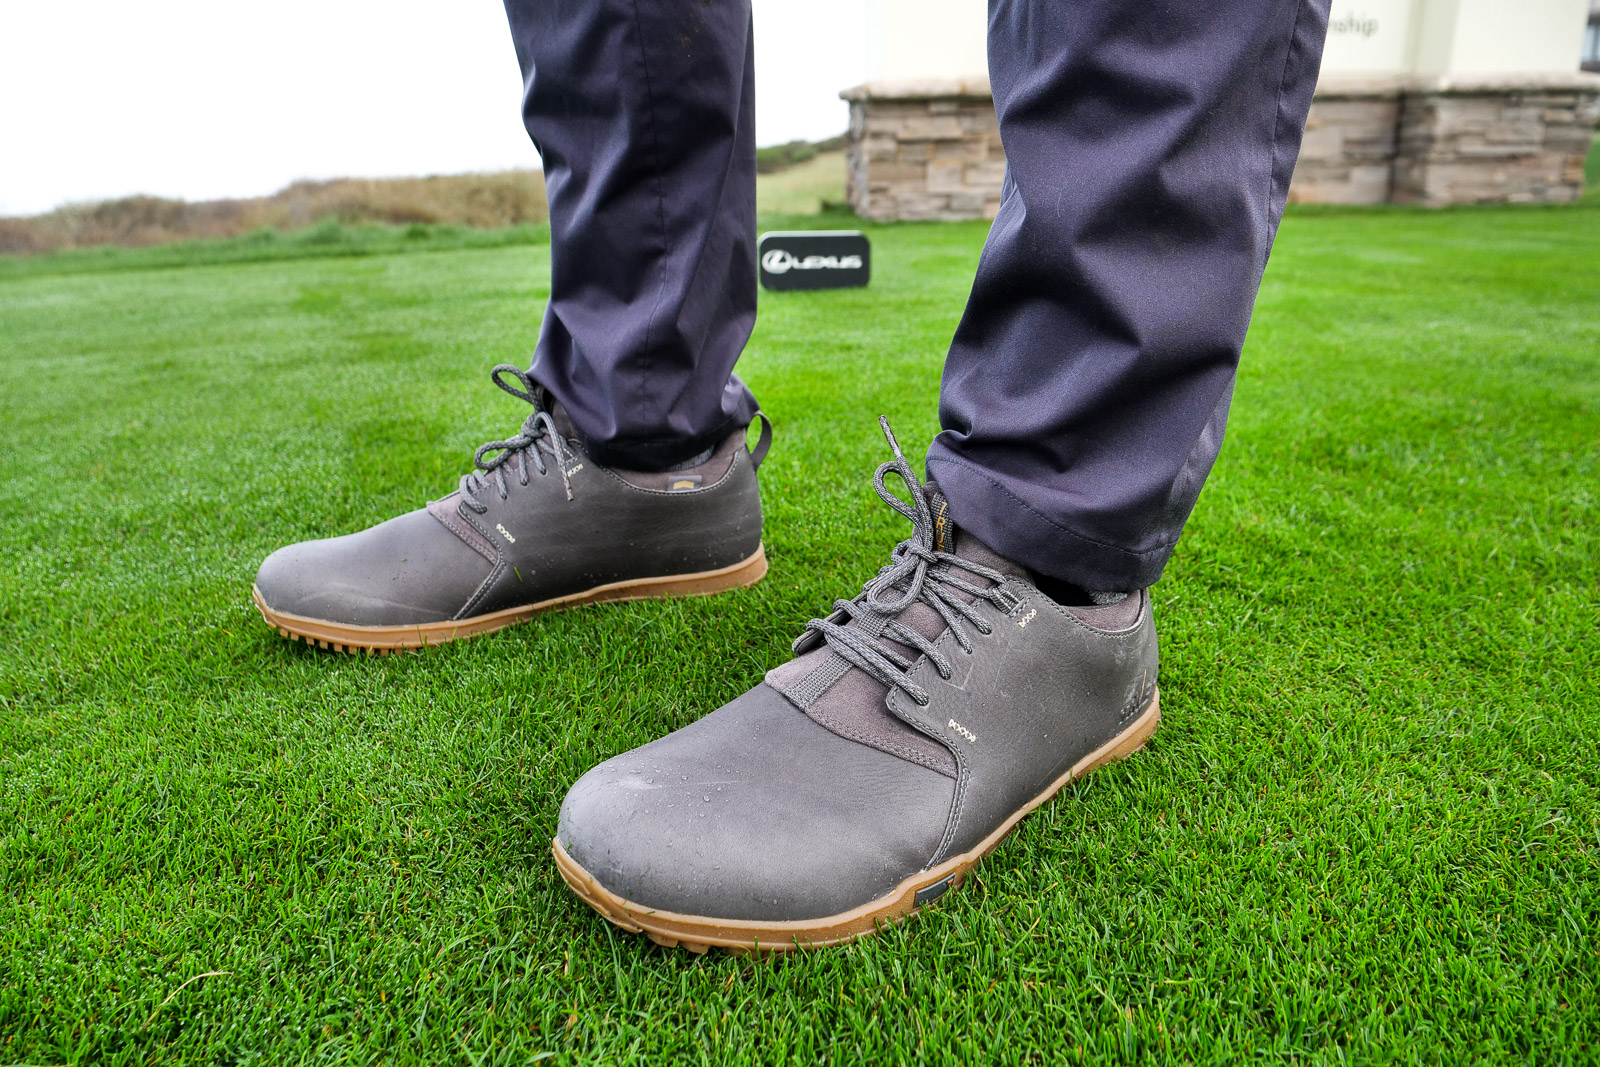 TRUE Linkswear OG Premium Review True On/Off Course Golf Shoe?